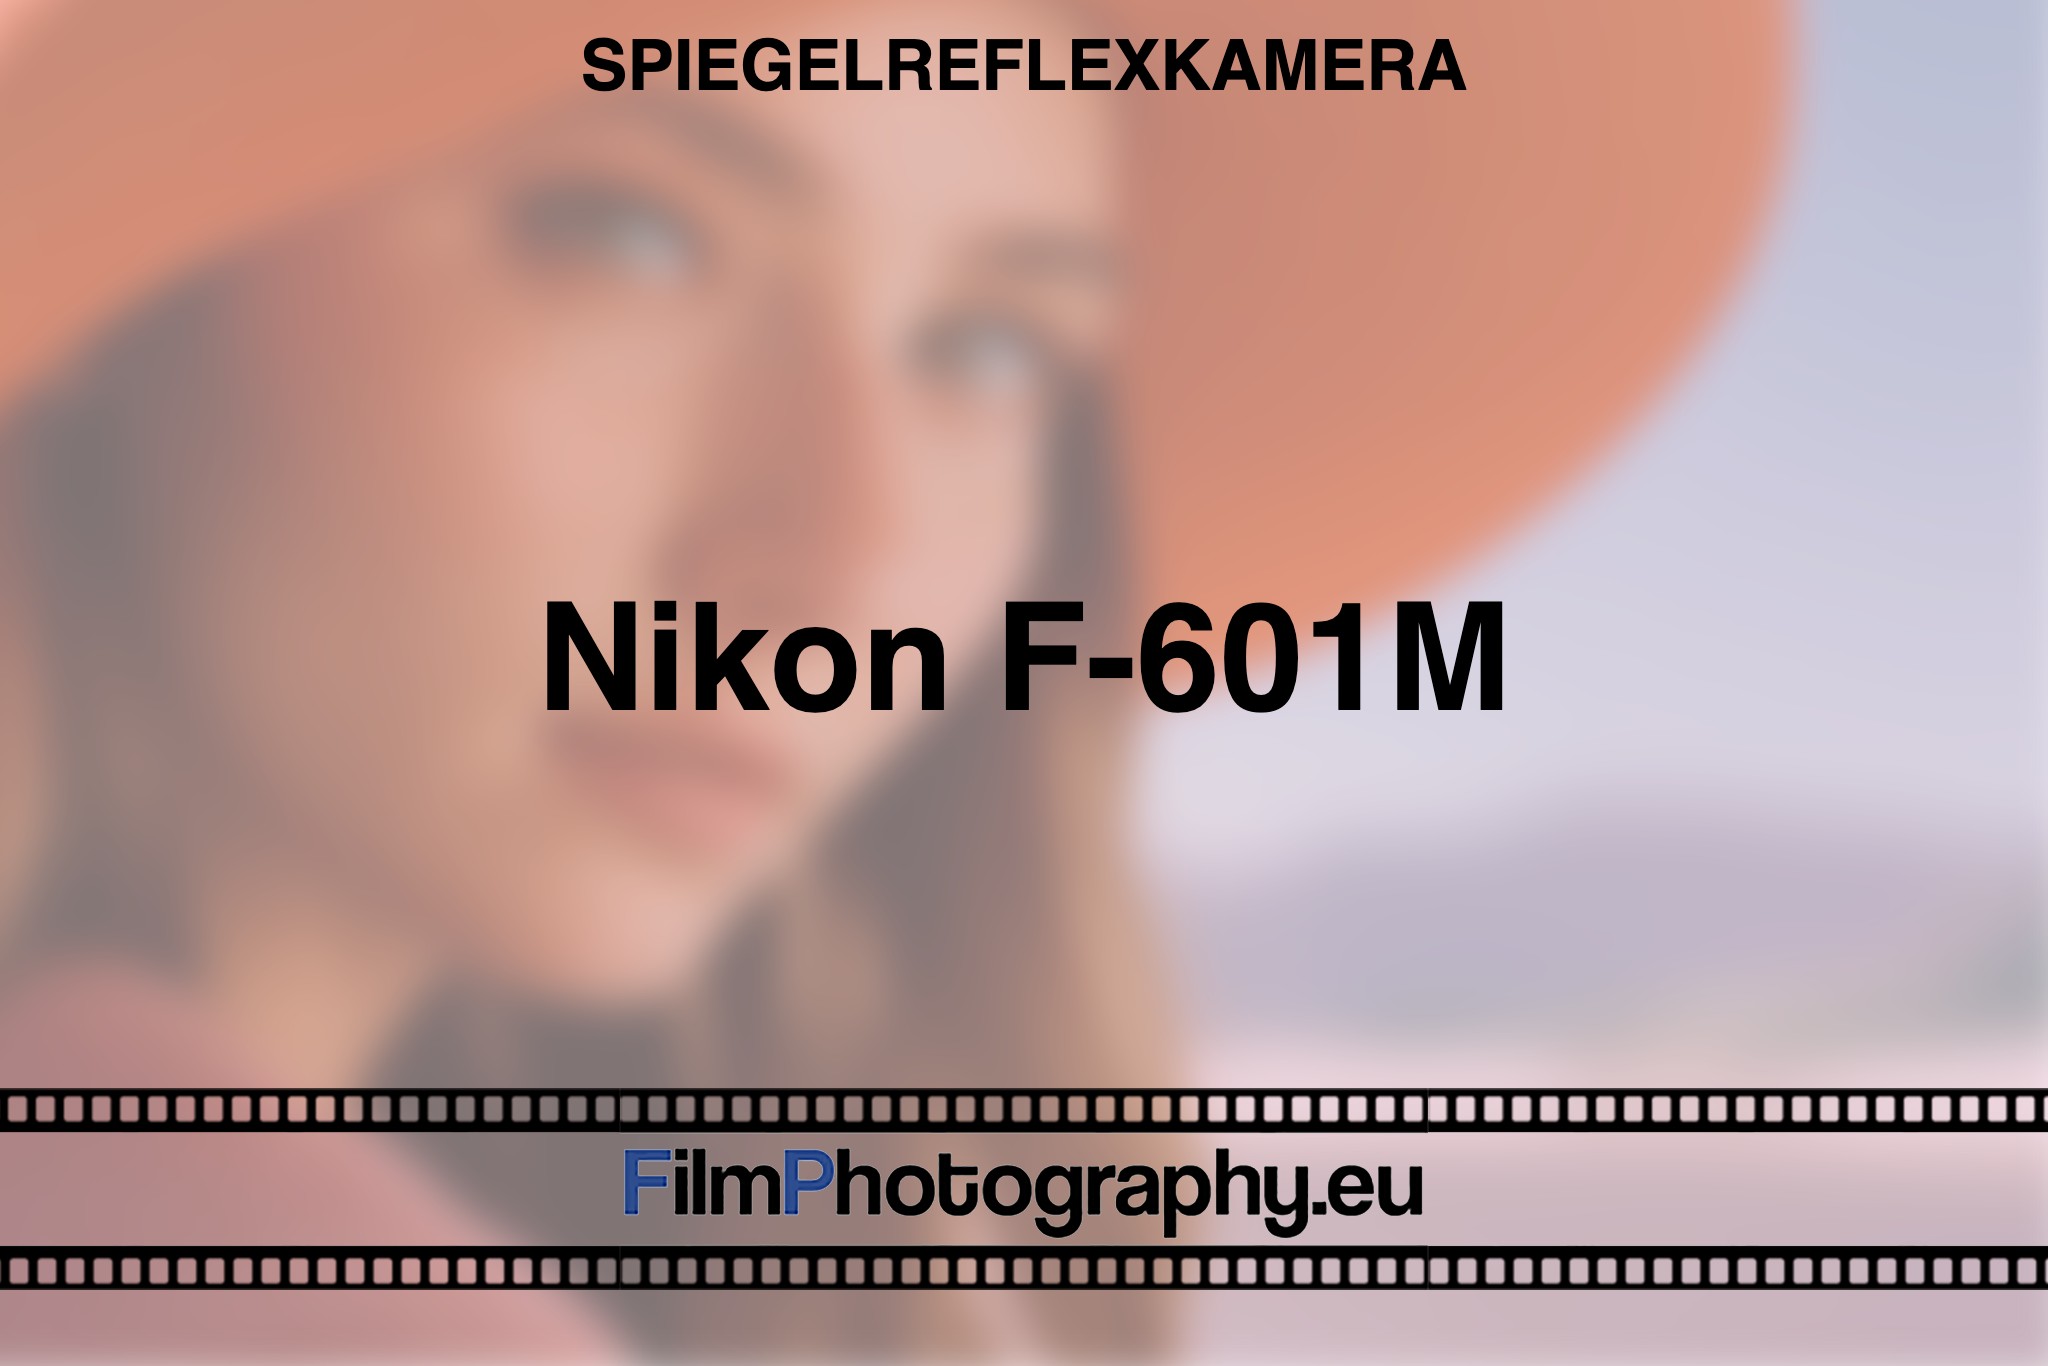 nikon-f-601m-spiegelreflexkamera-bnv